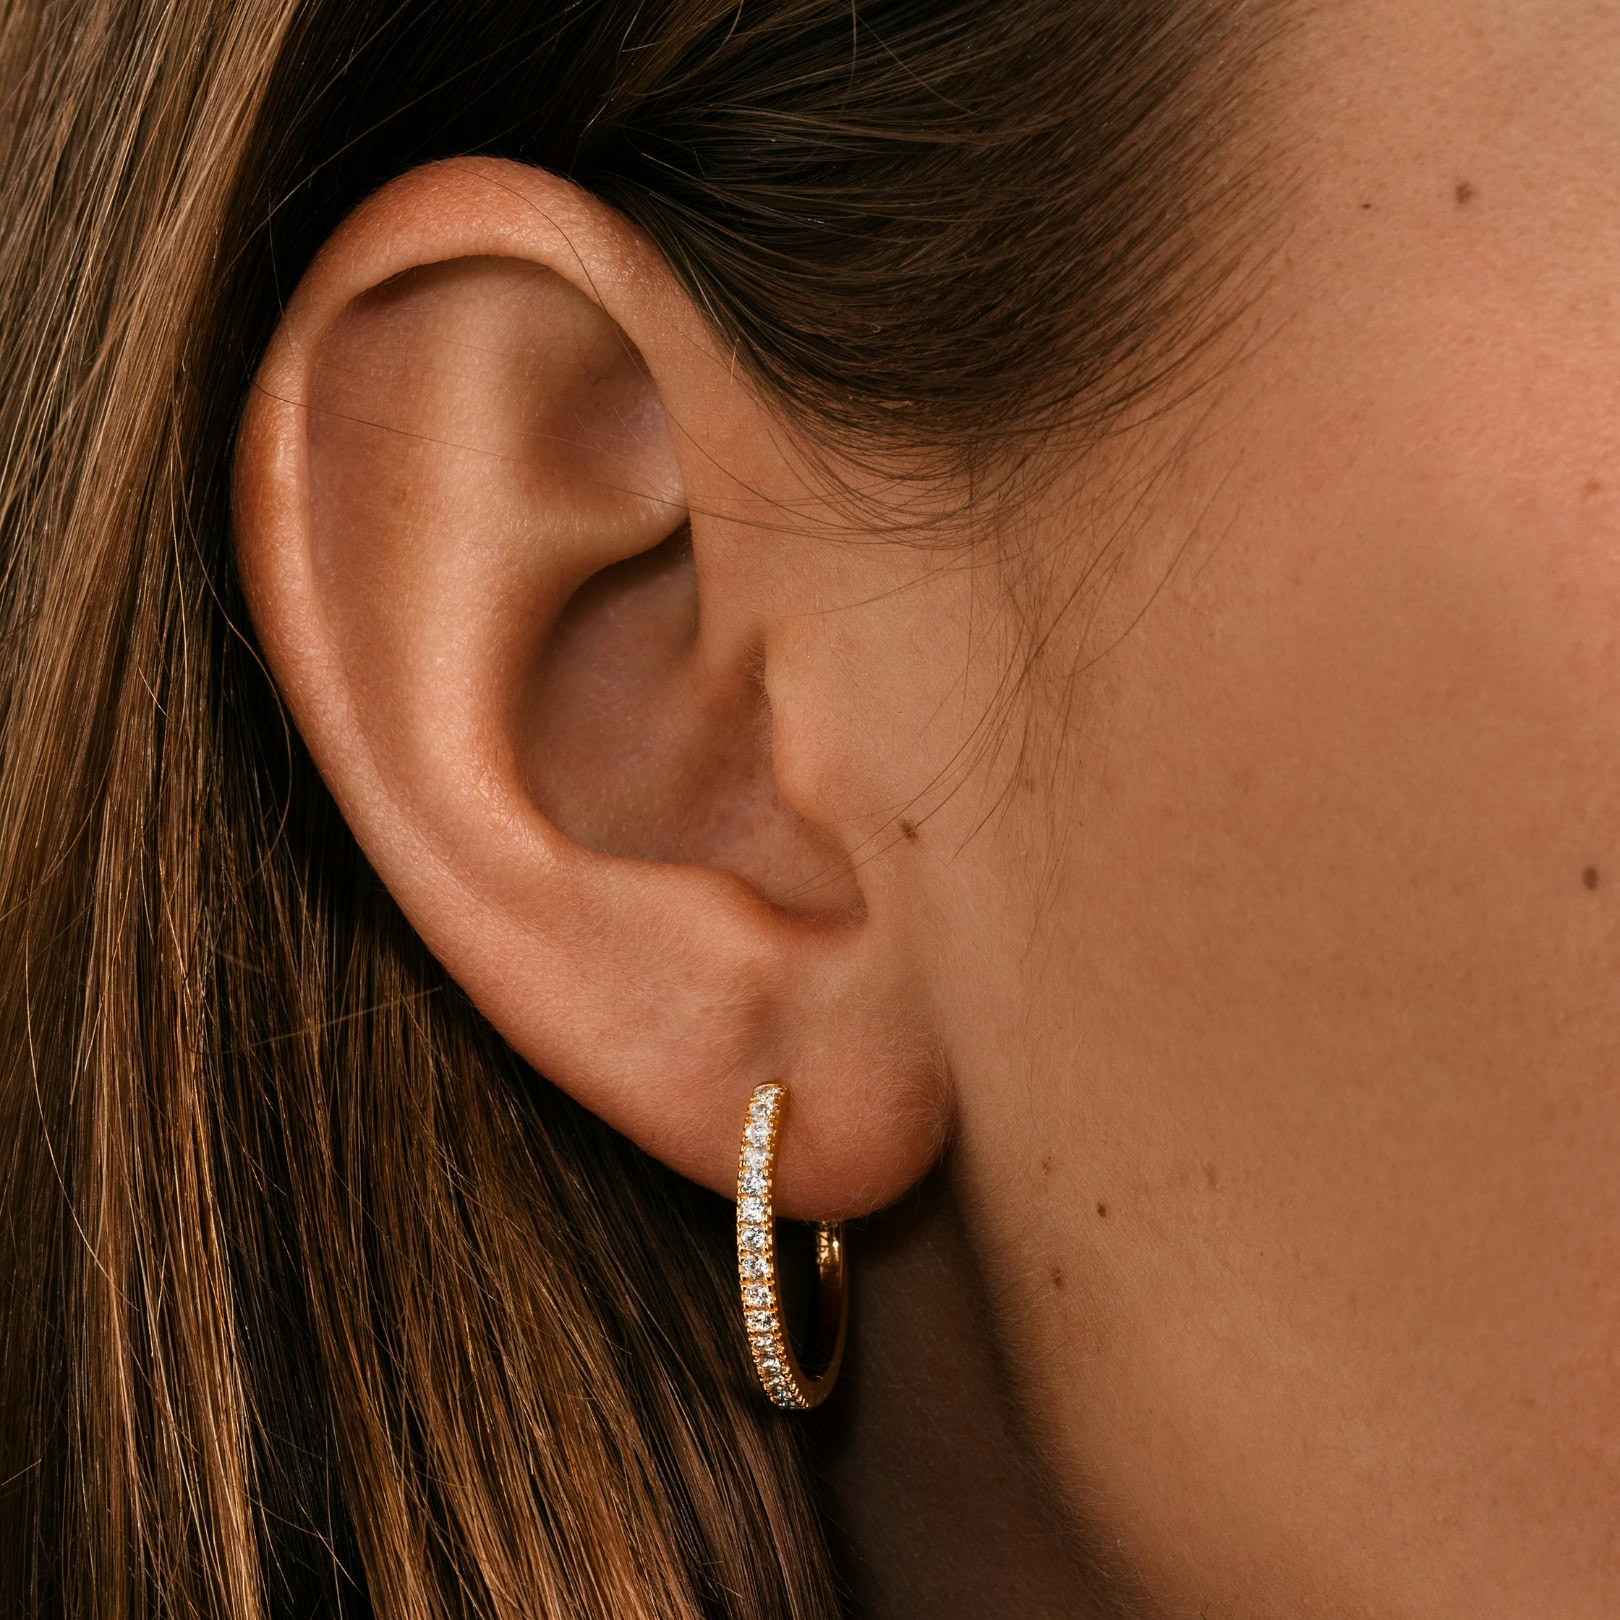 Sweet Dreams earrings